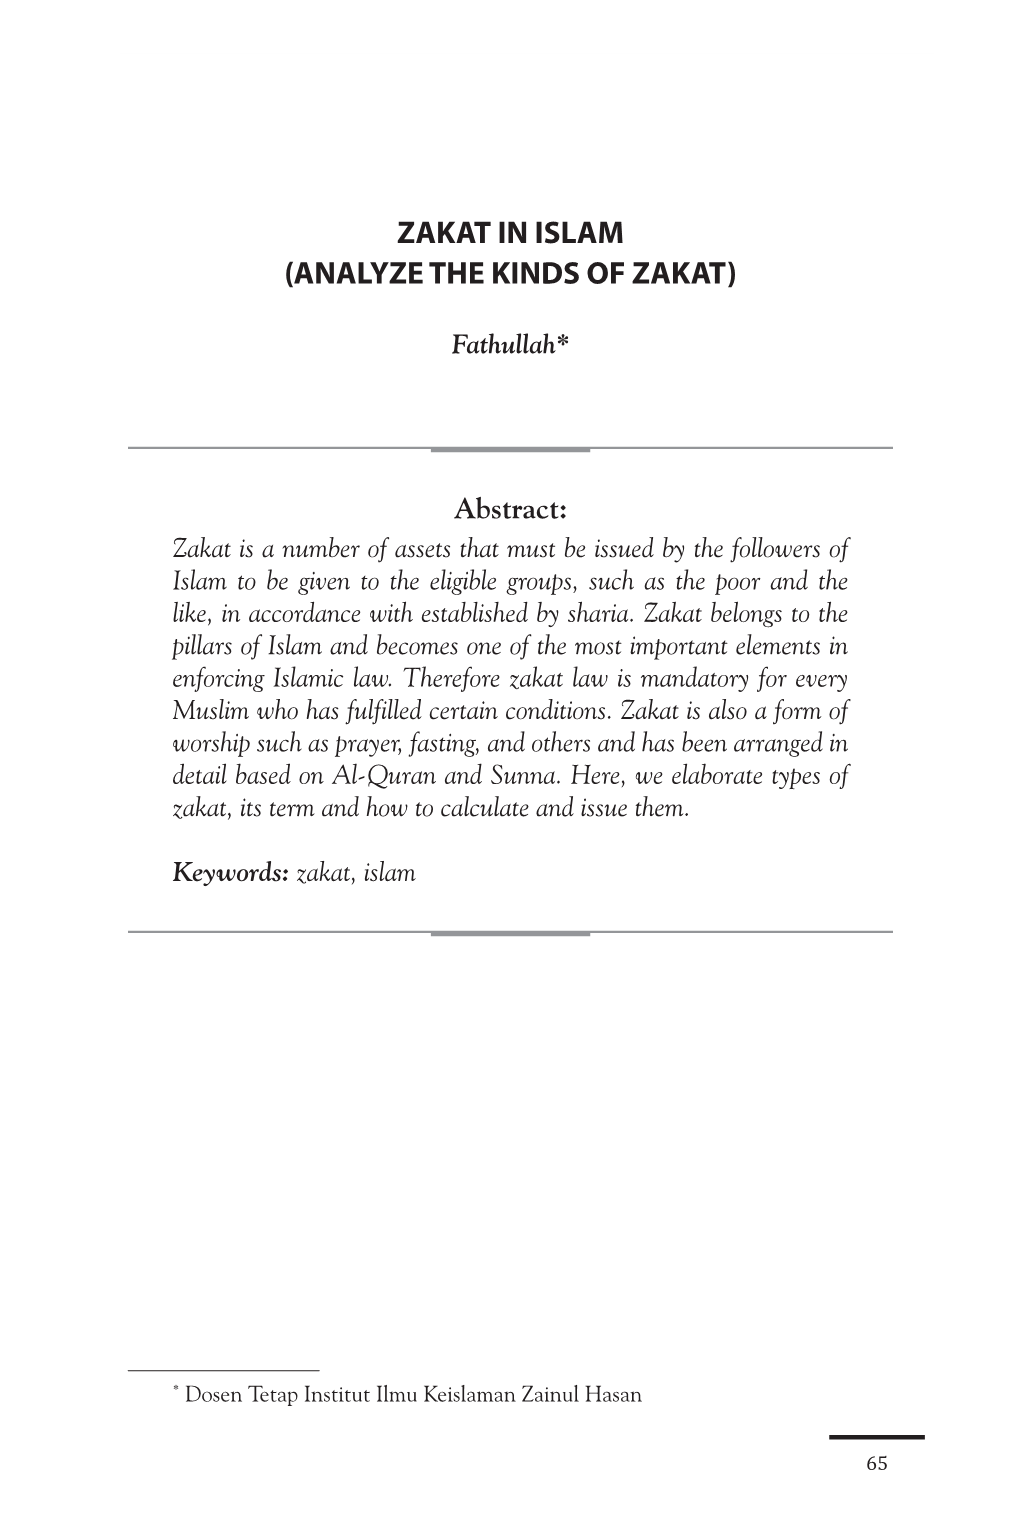 Zakat in Islam (Analyze the Kinds of Zakat) (65-74)